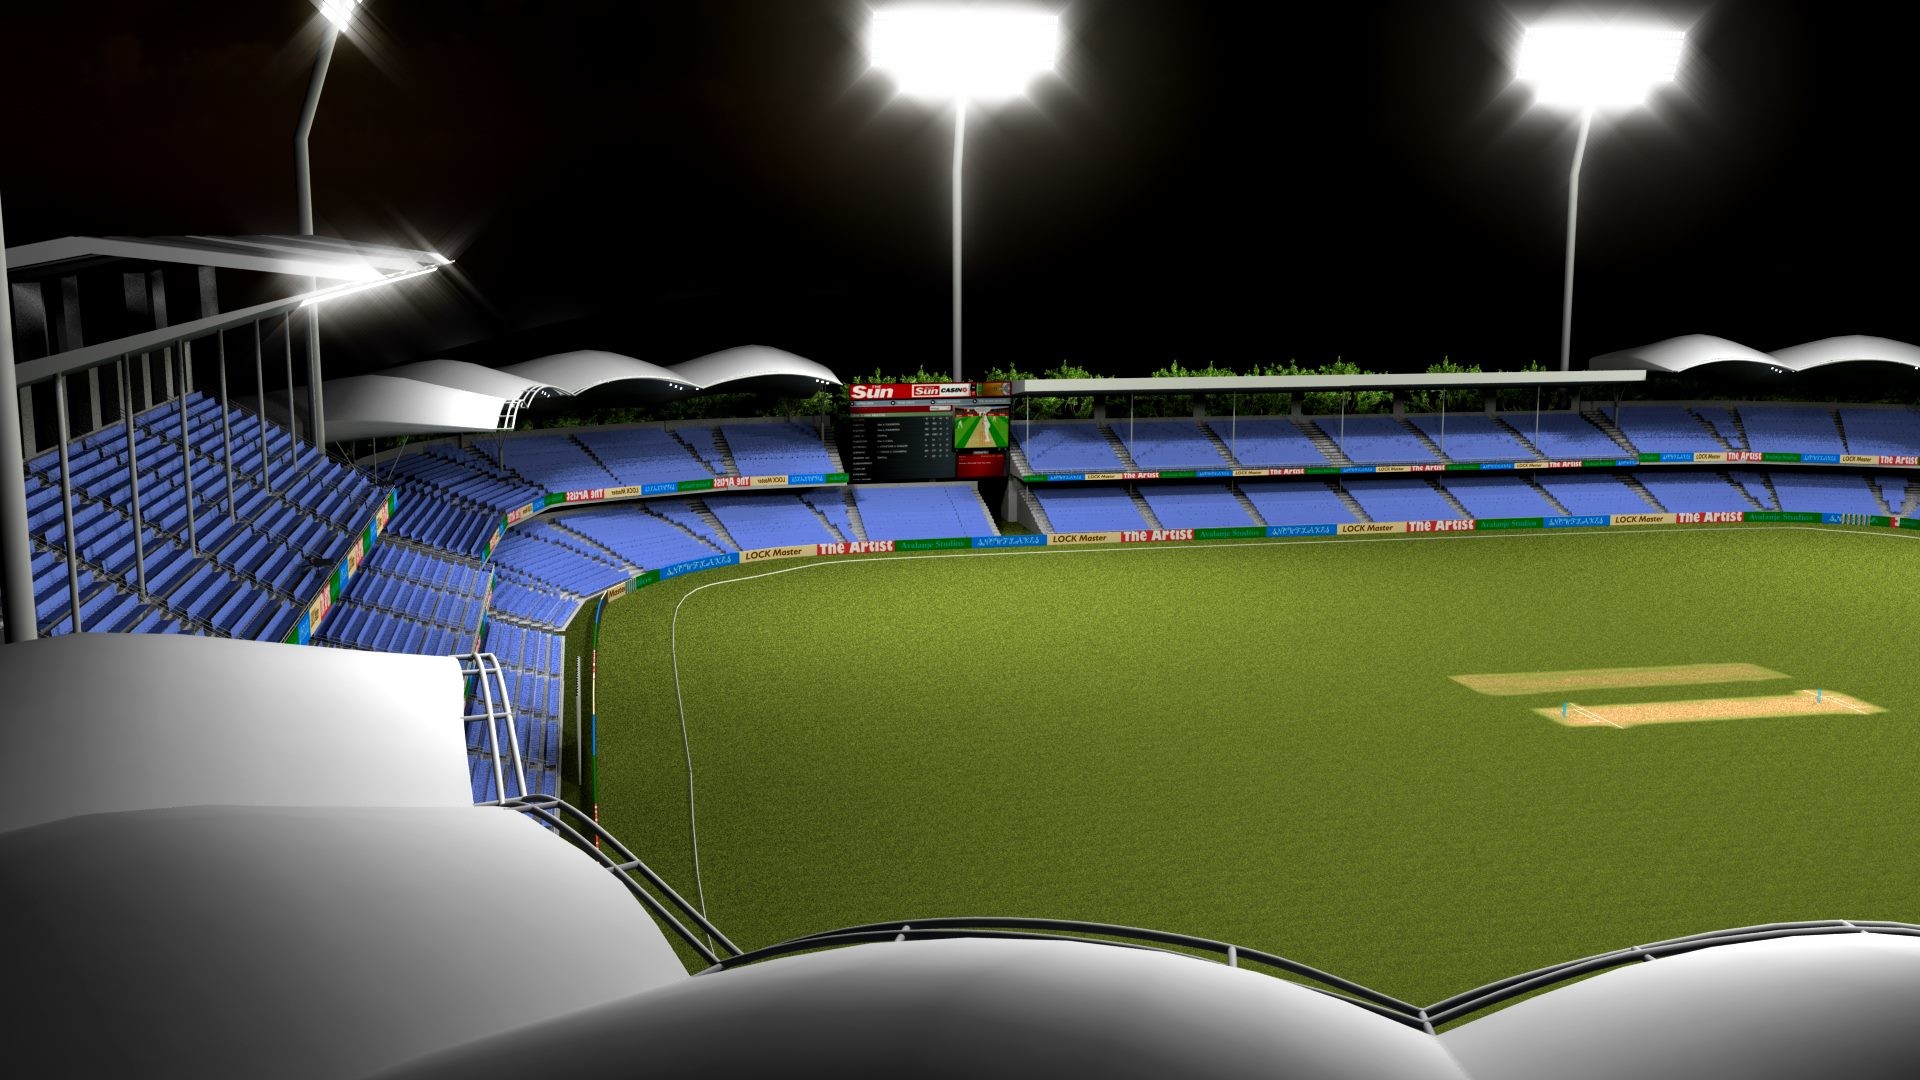 ArtStation - Cricket stadium